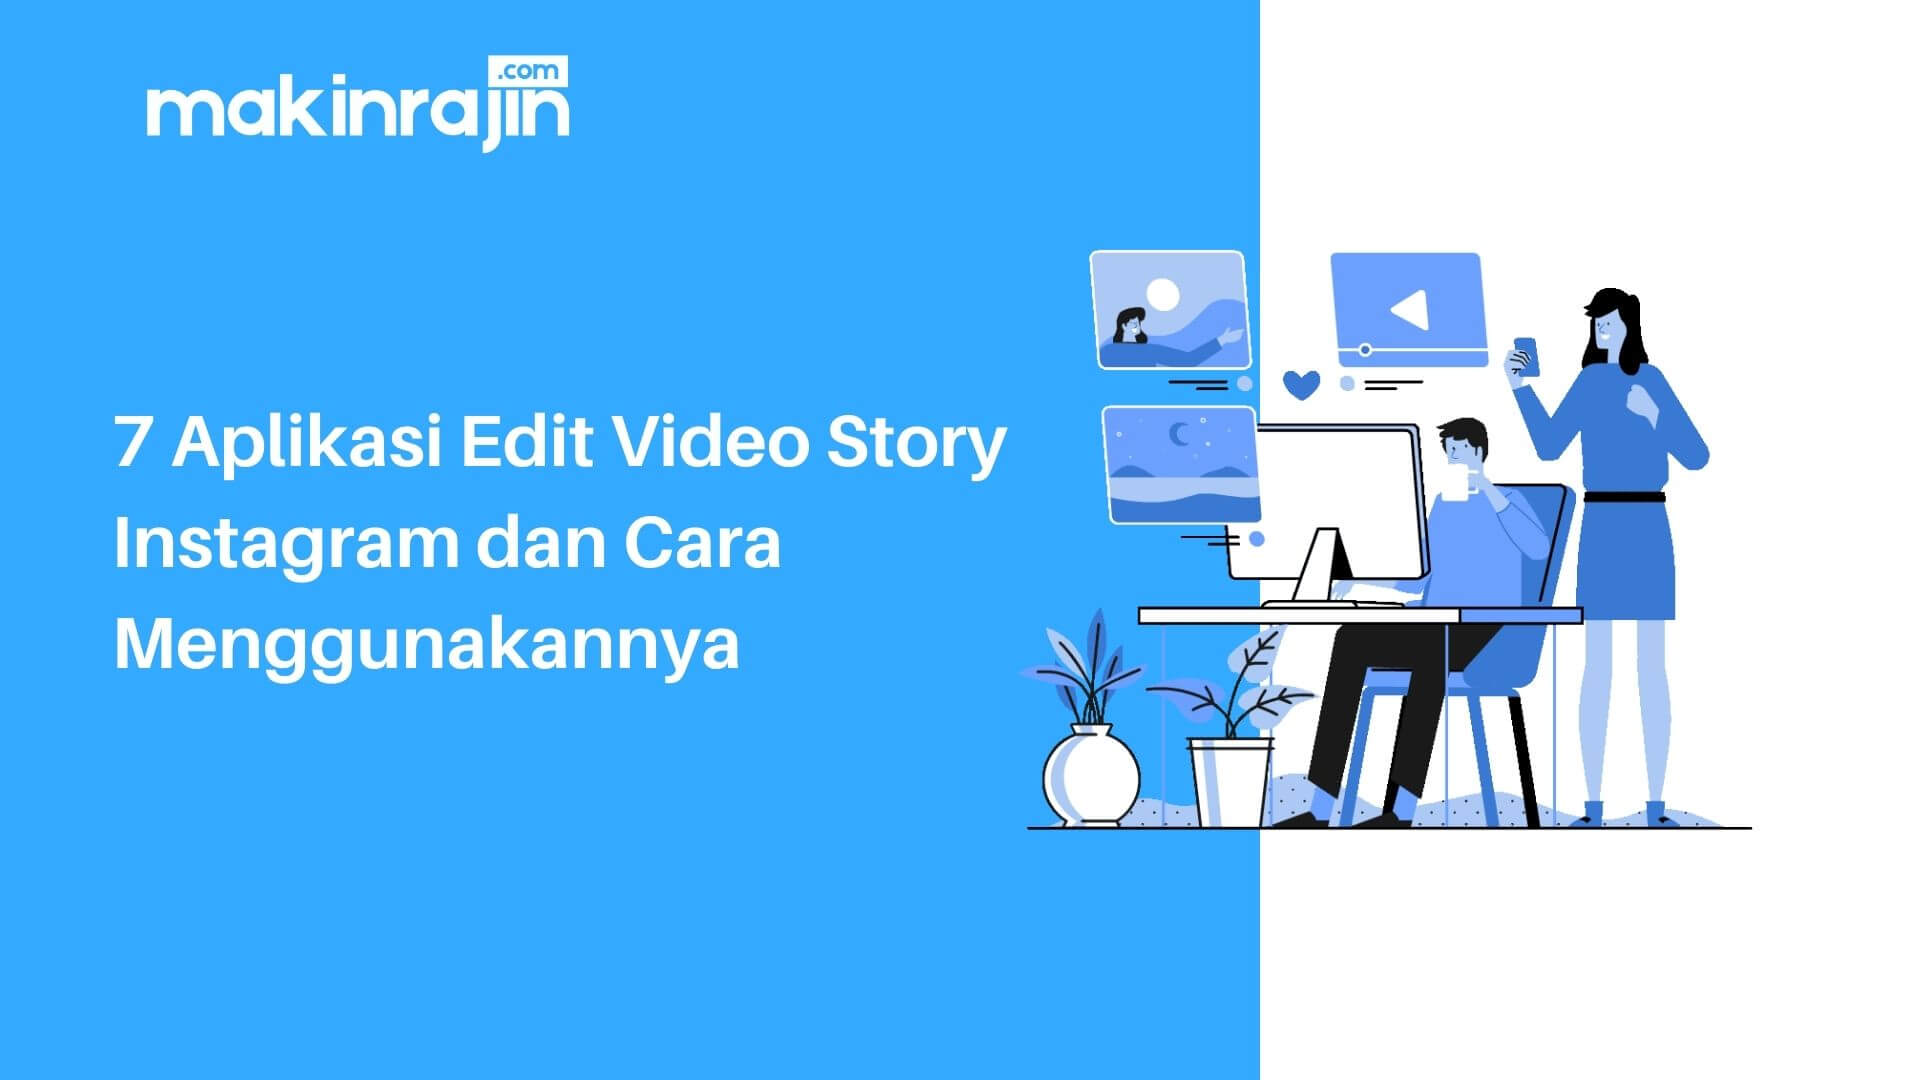 Aplikasi Edit Video Selebgram. 7 Aplikasi Edit Video Story Instagram dan WhatsApp